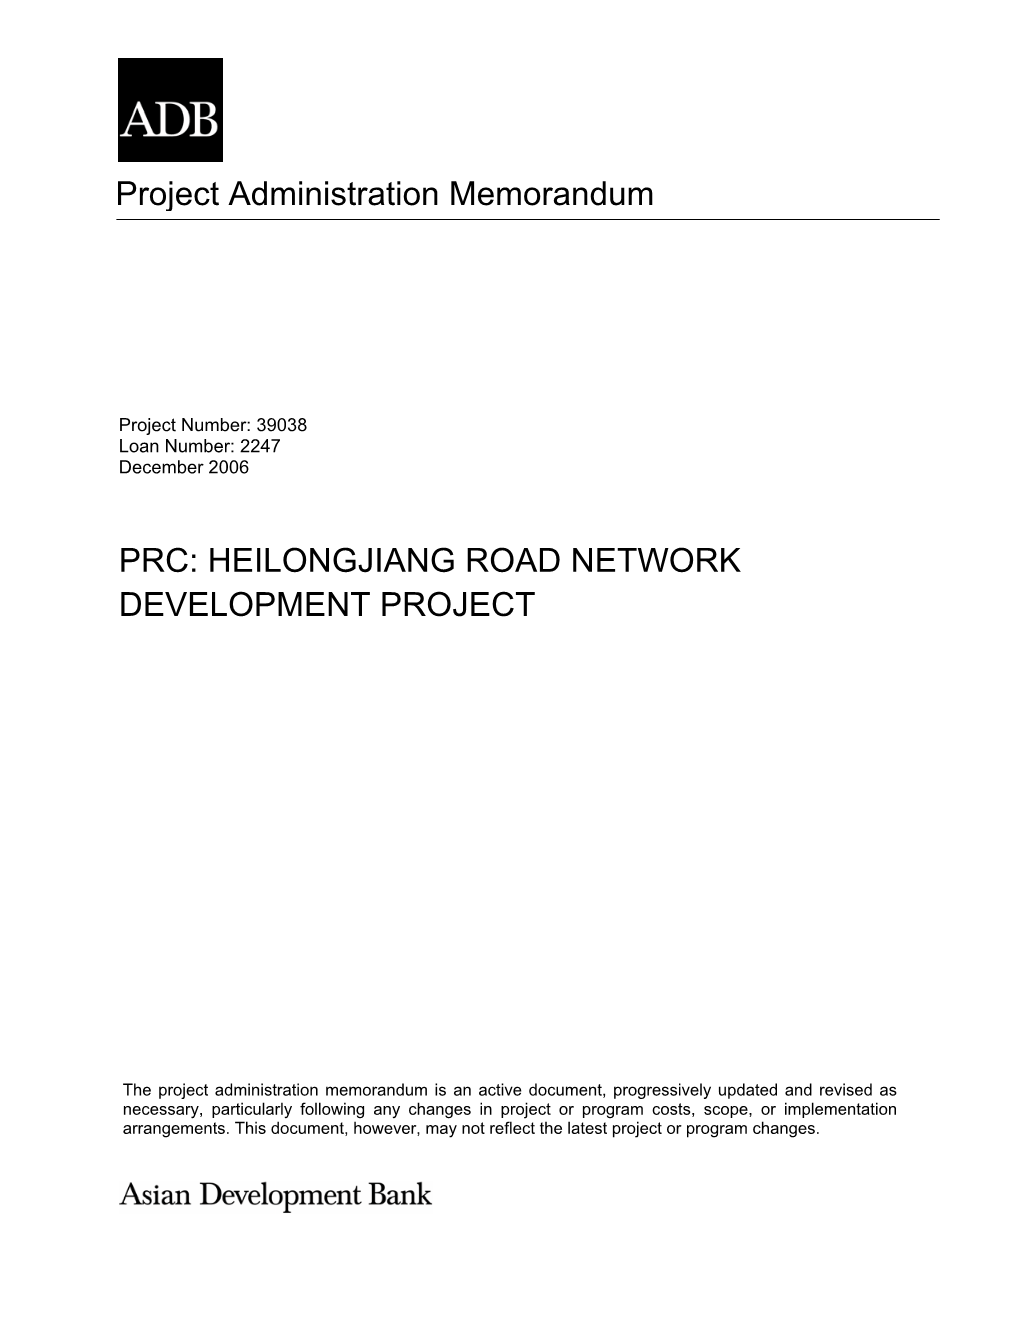 Heilongjiang Roads Network Development Project